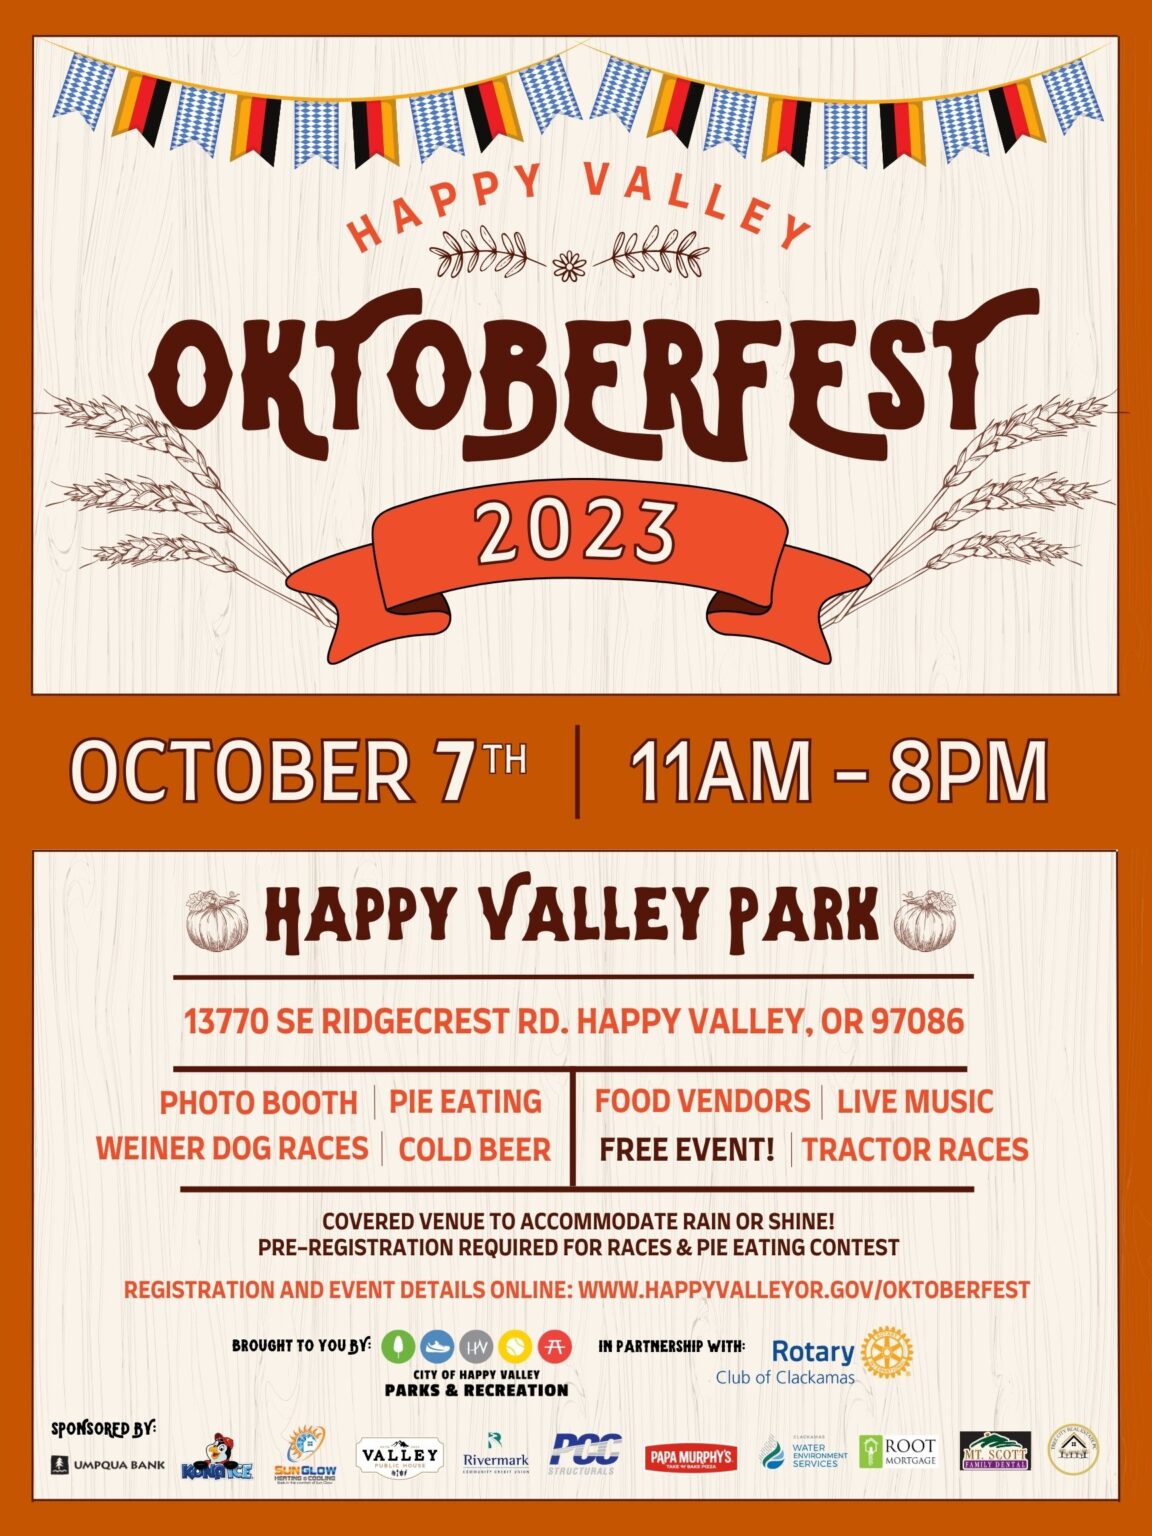 Oktoberfest 2023 City of Happy Valley